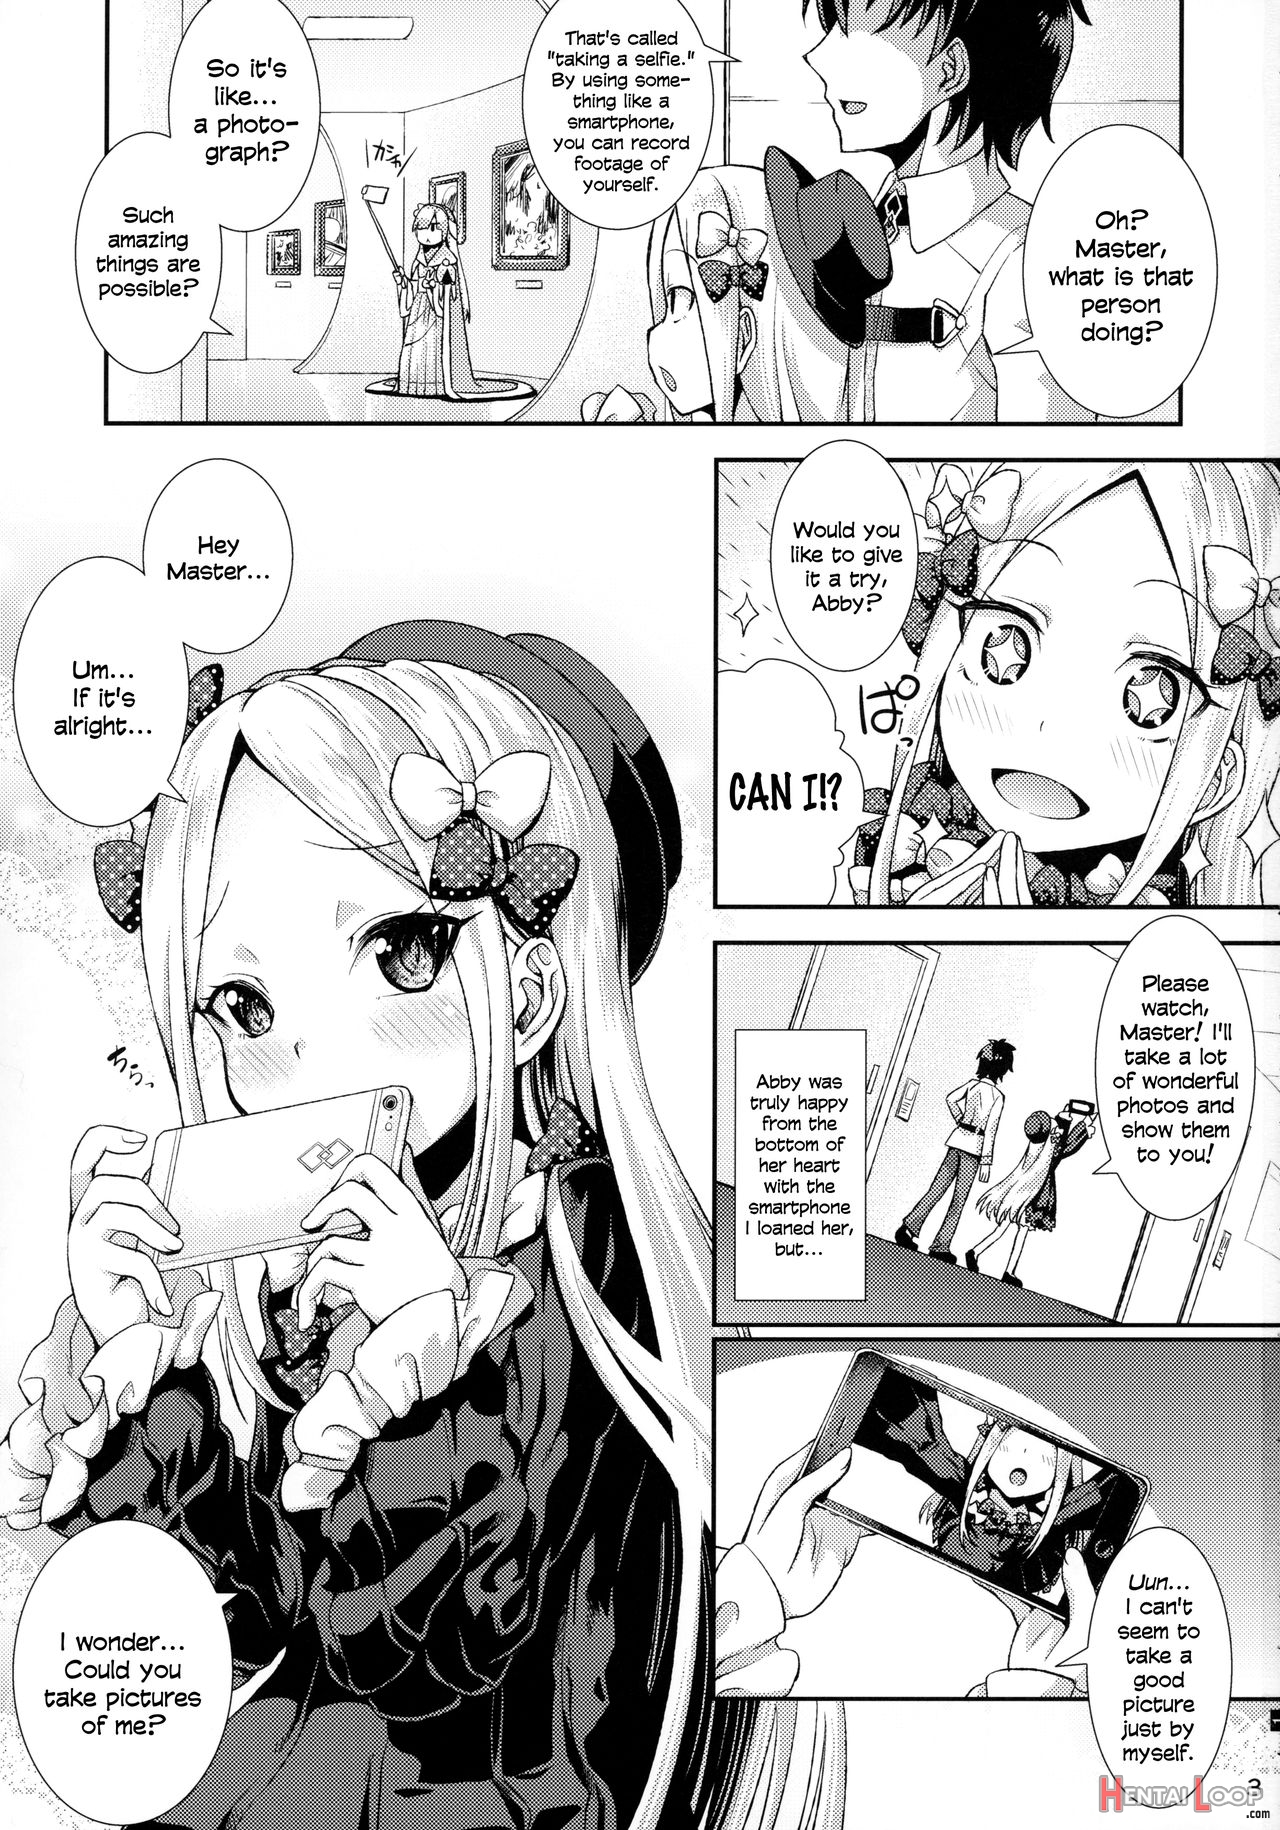 Page 3 of Abby And The Secret Homemade Sex Tape (by Yamazaki Kana)